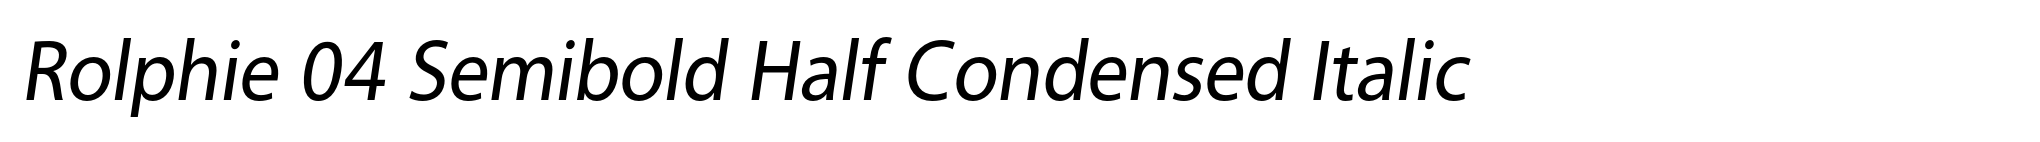 Rolphie 04 Semibold Half Condensed Italic image